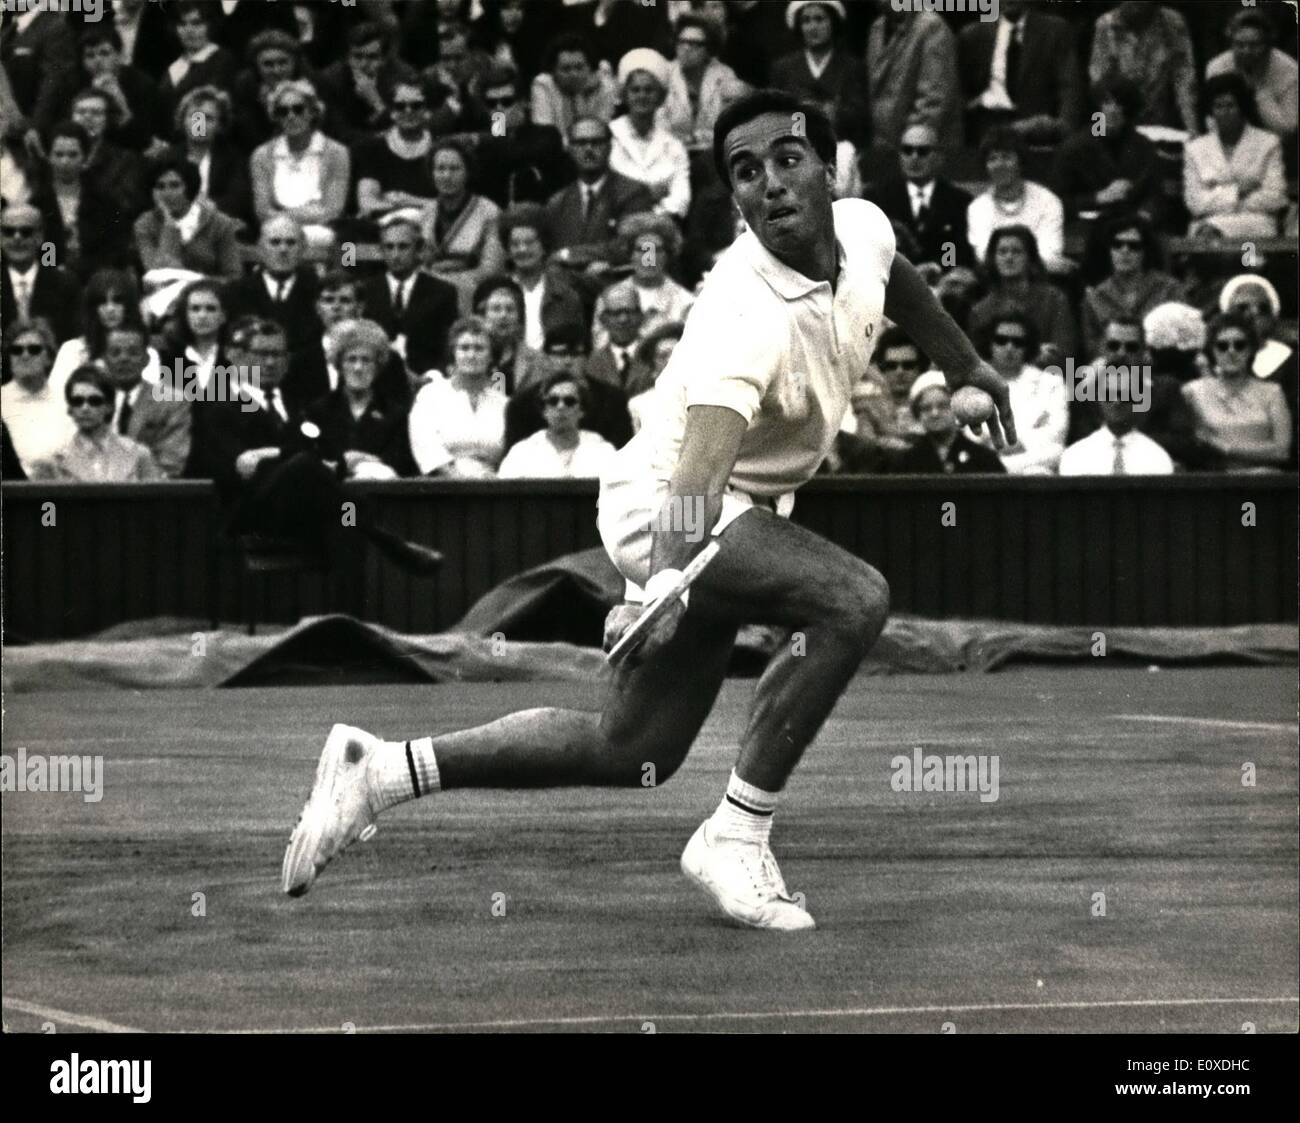 Jun. 20, 1966 - 20.6.66 Opening day of the Wimbledon Tennis Tournament ...